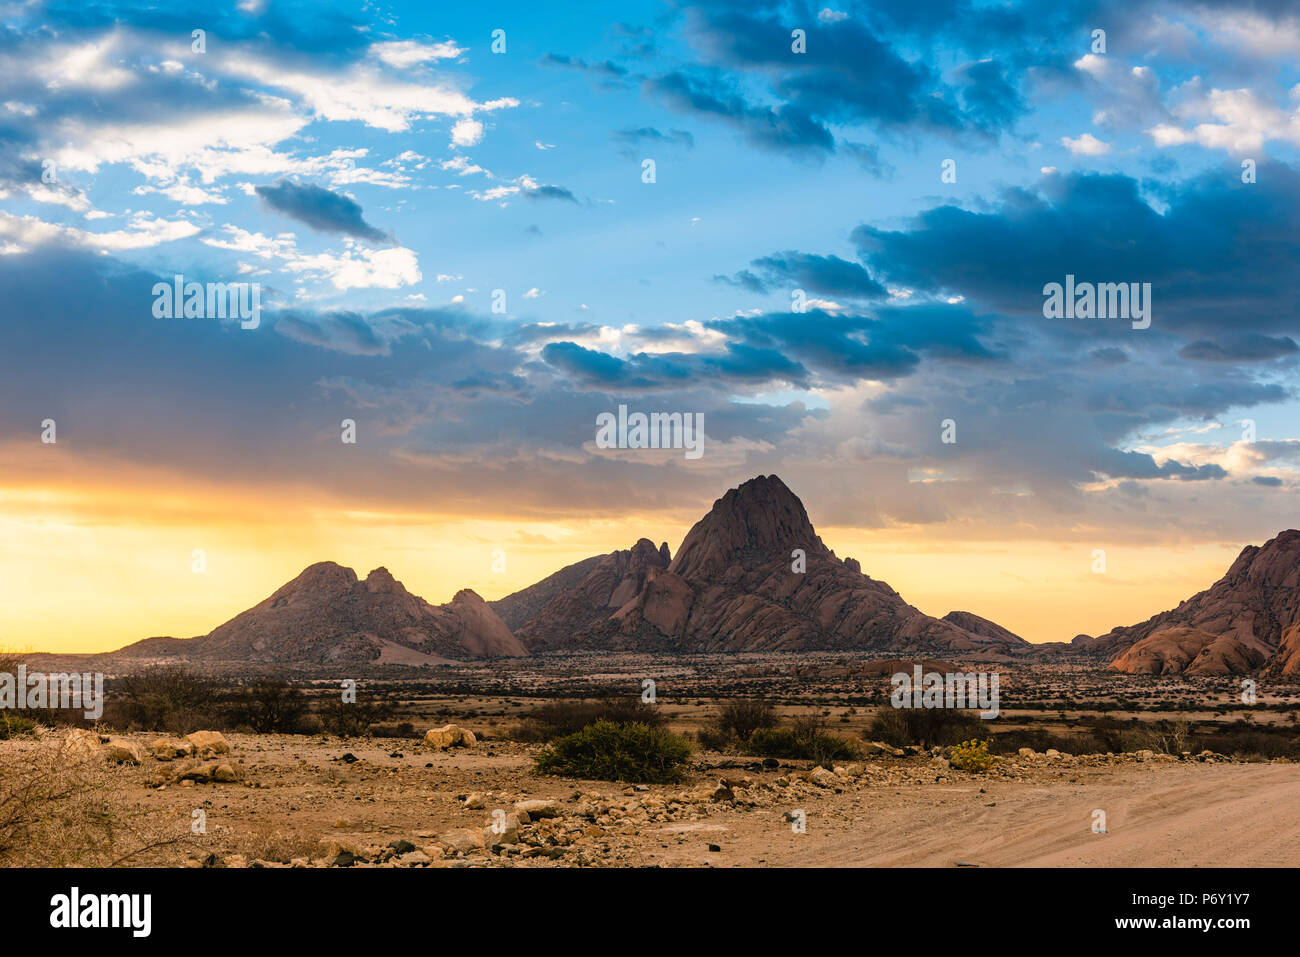 Die Spitzkoppe, Damaraland, Namibia, Afrika. Granit Berge bei Sonnenuntergang. Stockfoto